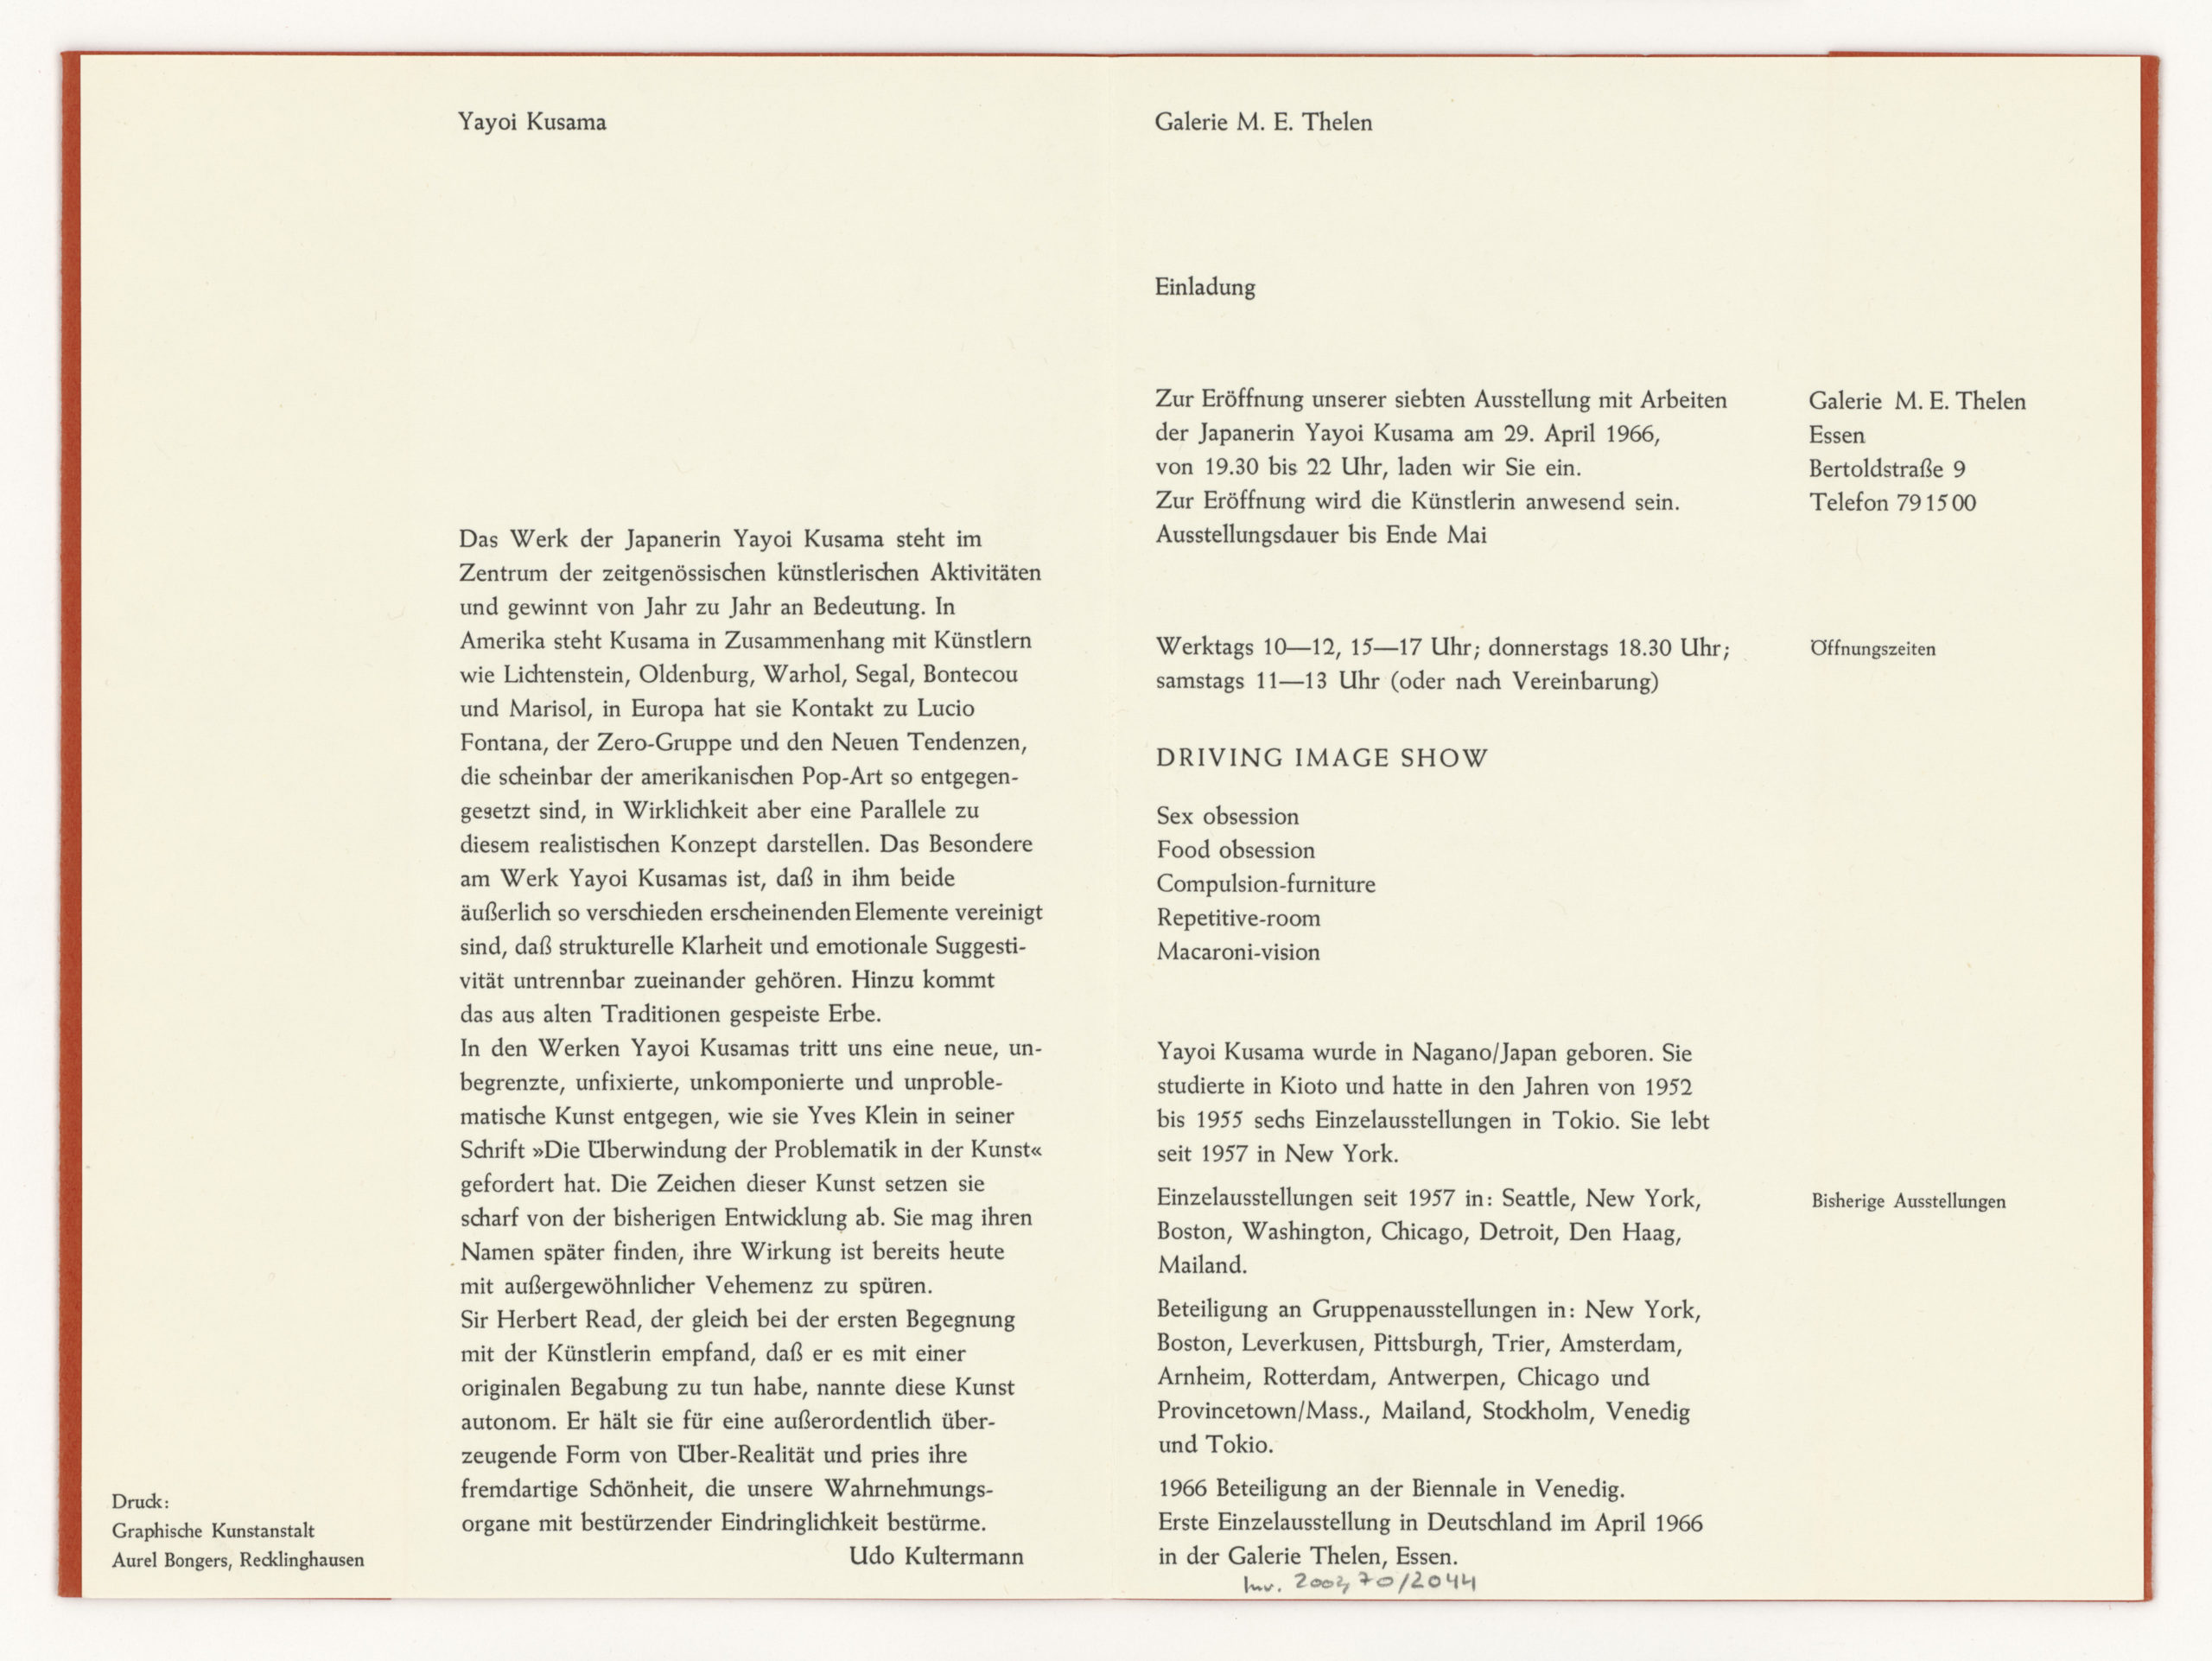 Yayoi Kusama, DRIVING IMAGE SHOW, Galerie Thelen, Essen, 1966 (invitation); Sammlung Marzona, Kunstbibliothek – Staatliche Museen zu Berlin